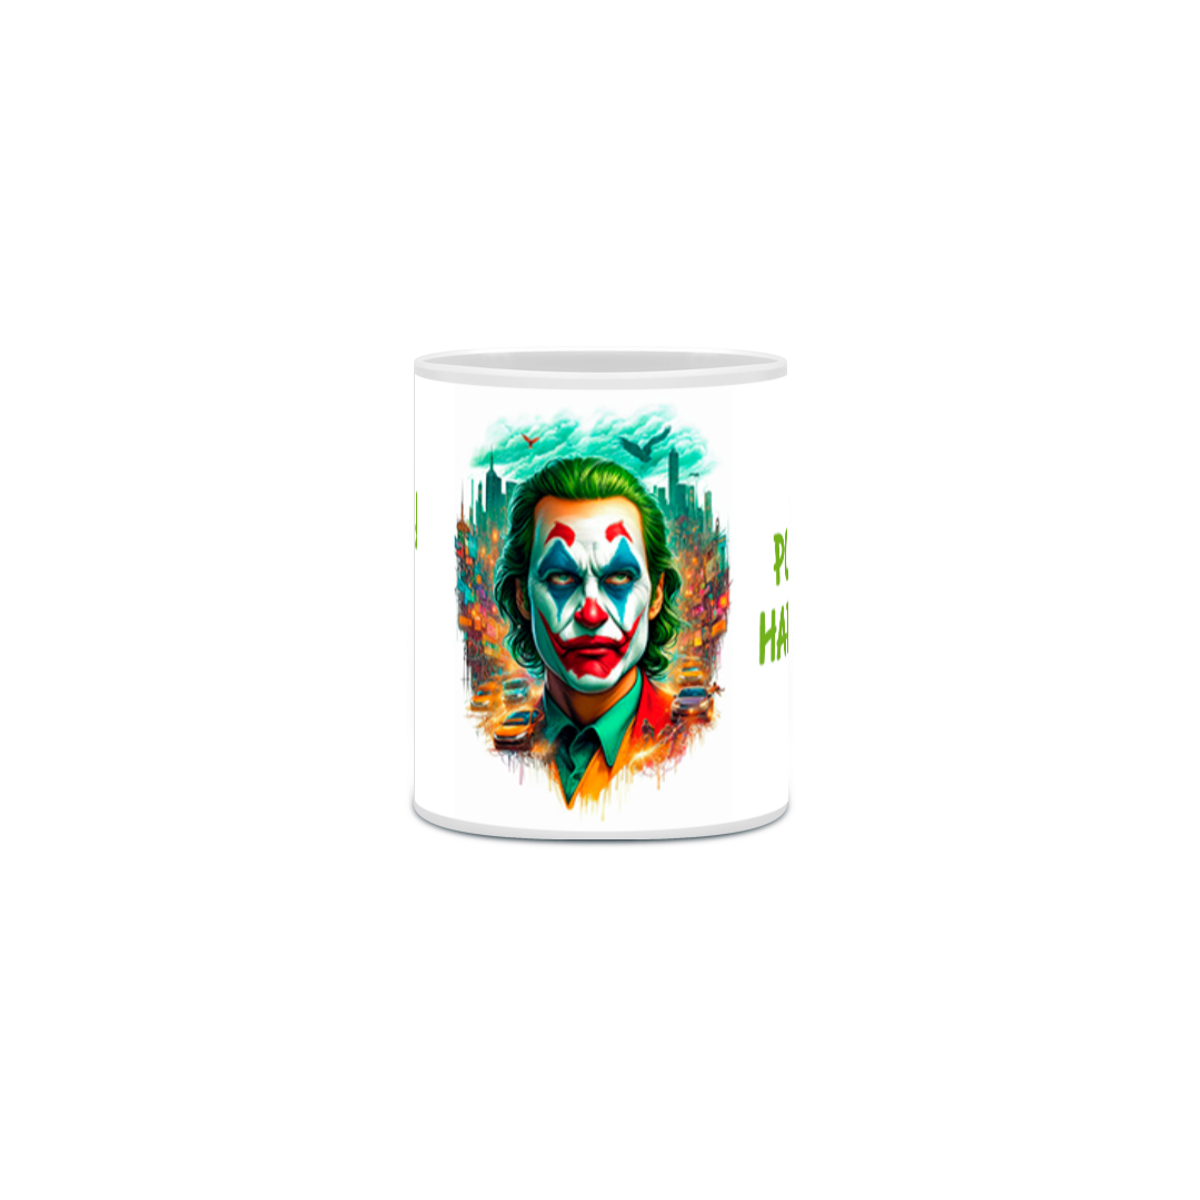 Nome do produto: Caneca Joker Put on a happy face